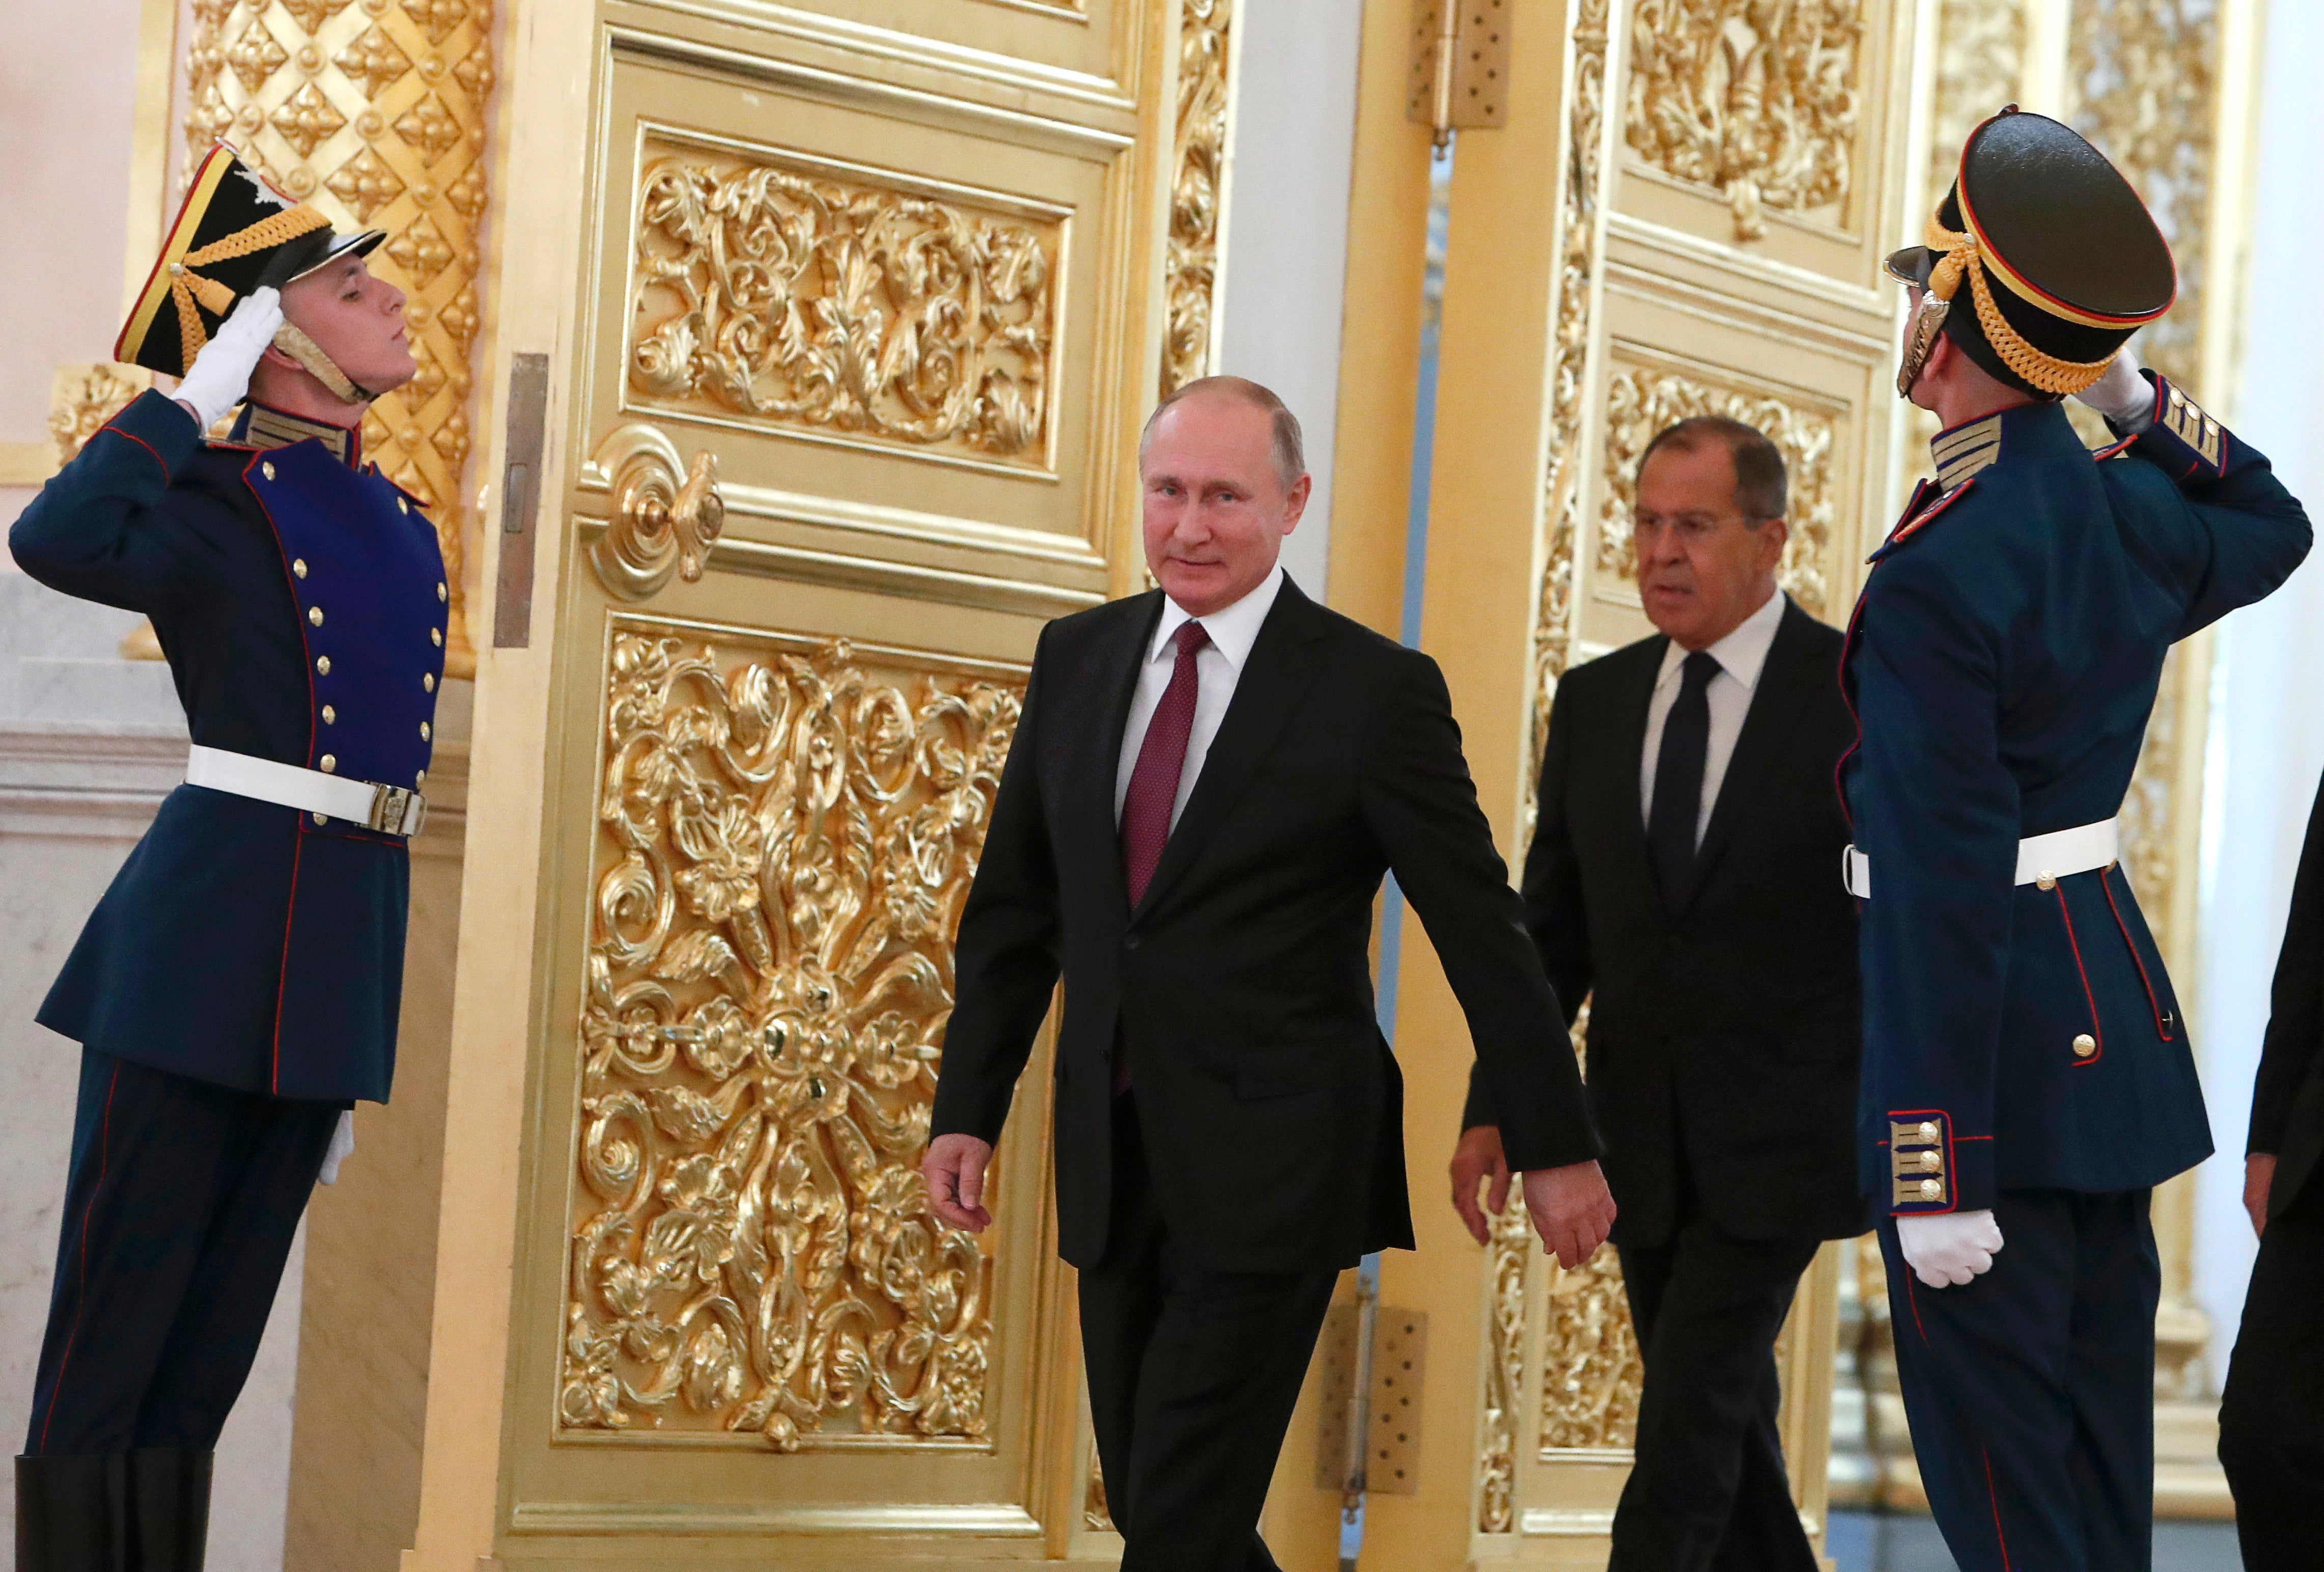 Sanctions have been imposed on Kremlin officials including Vladimir Putin and Sergei Lavrov